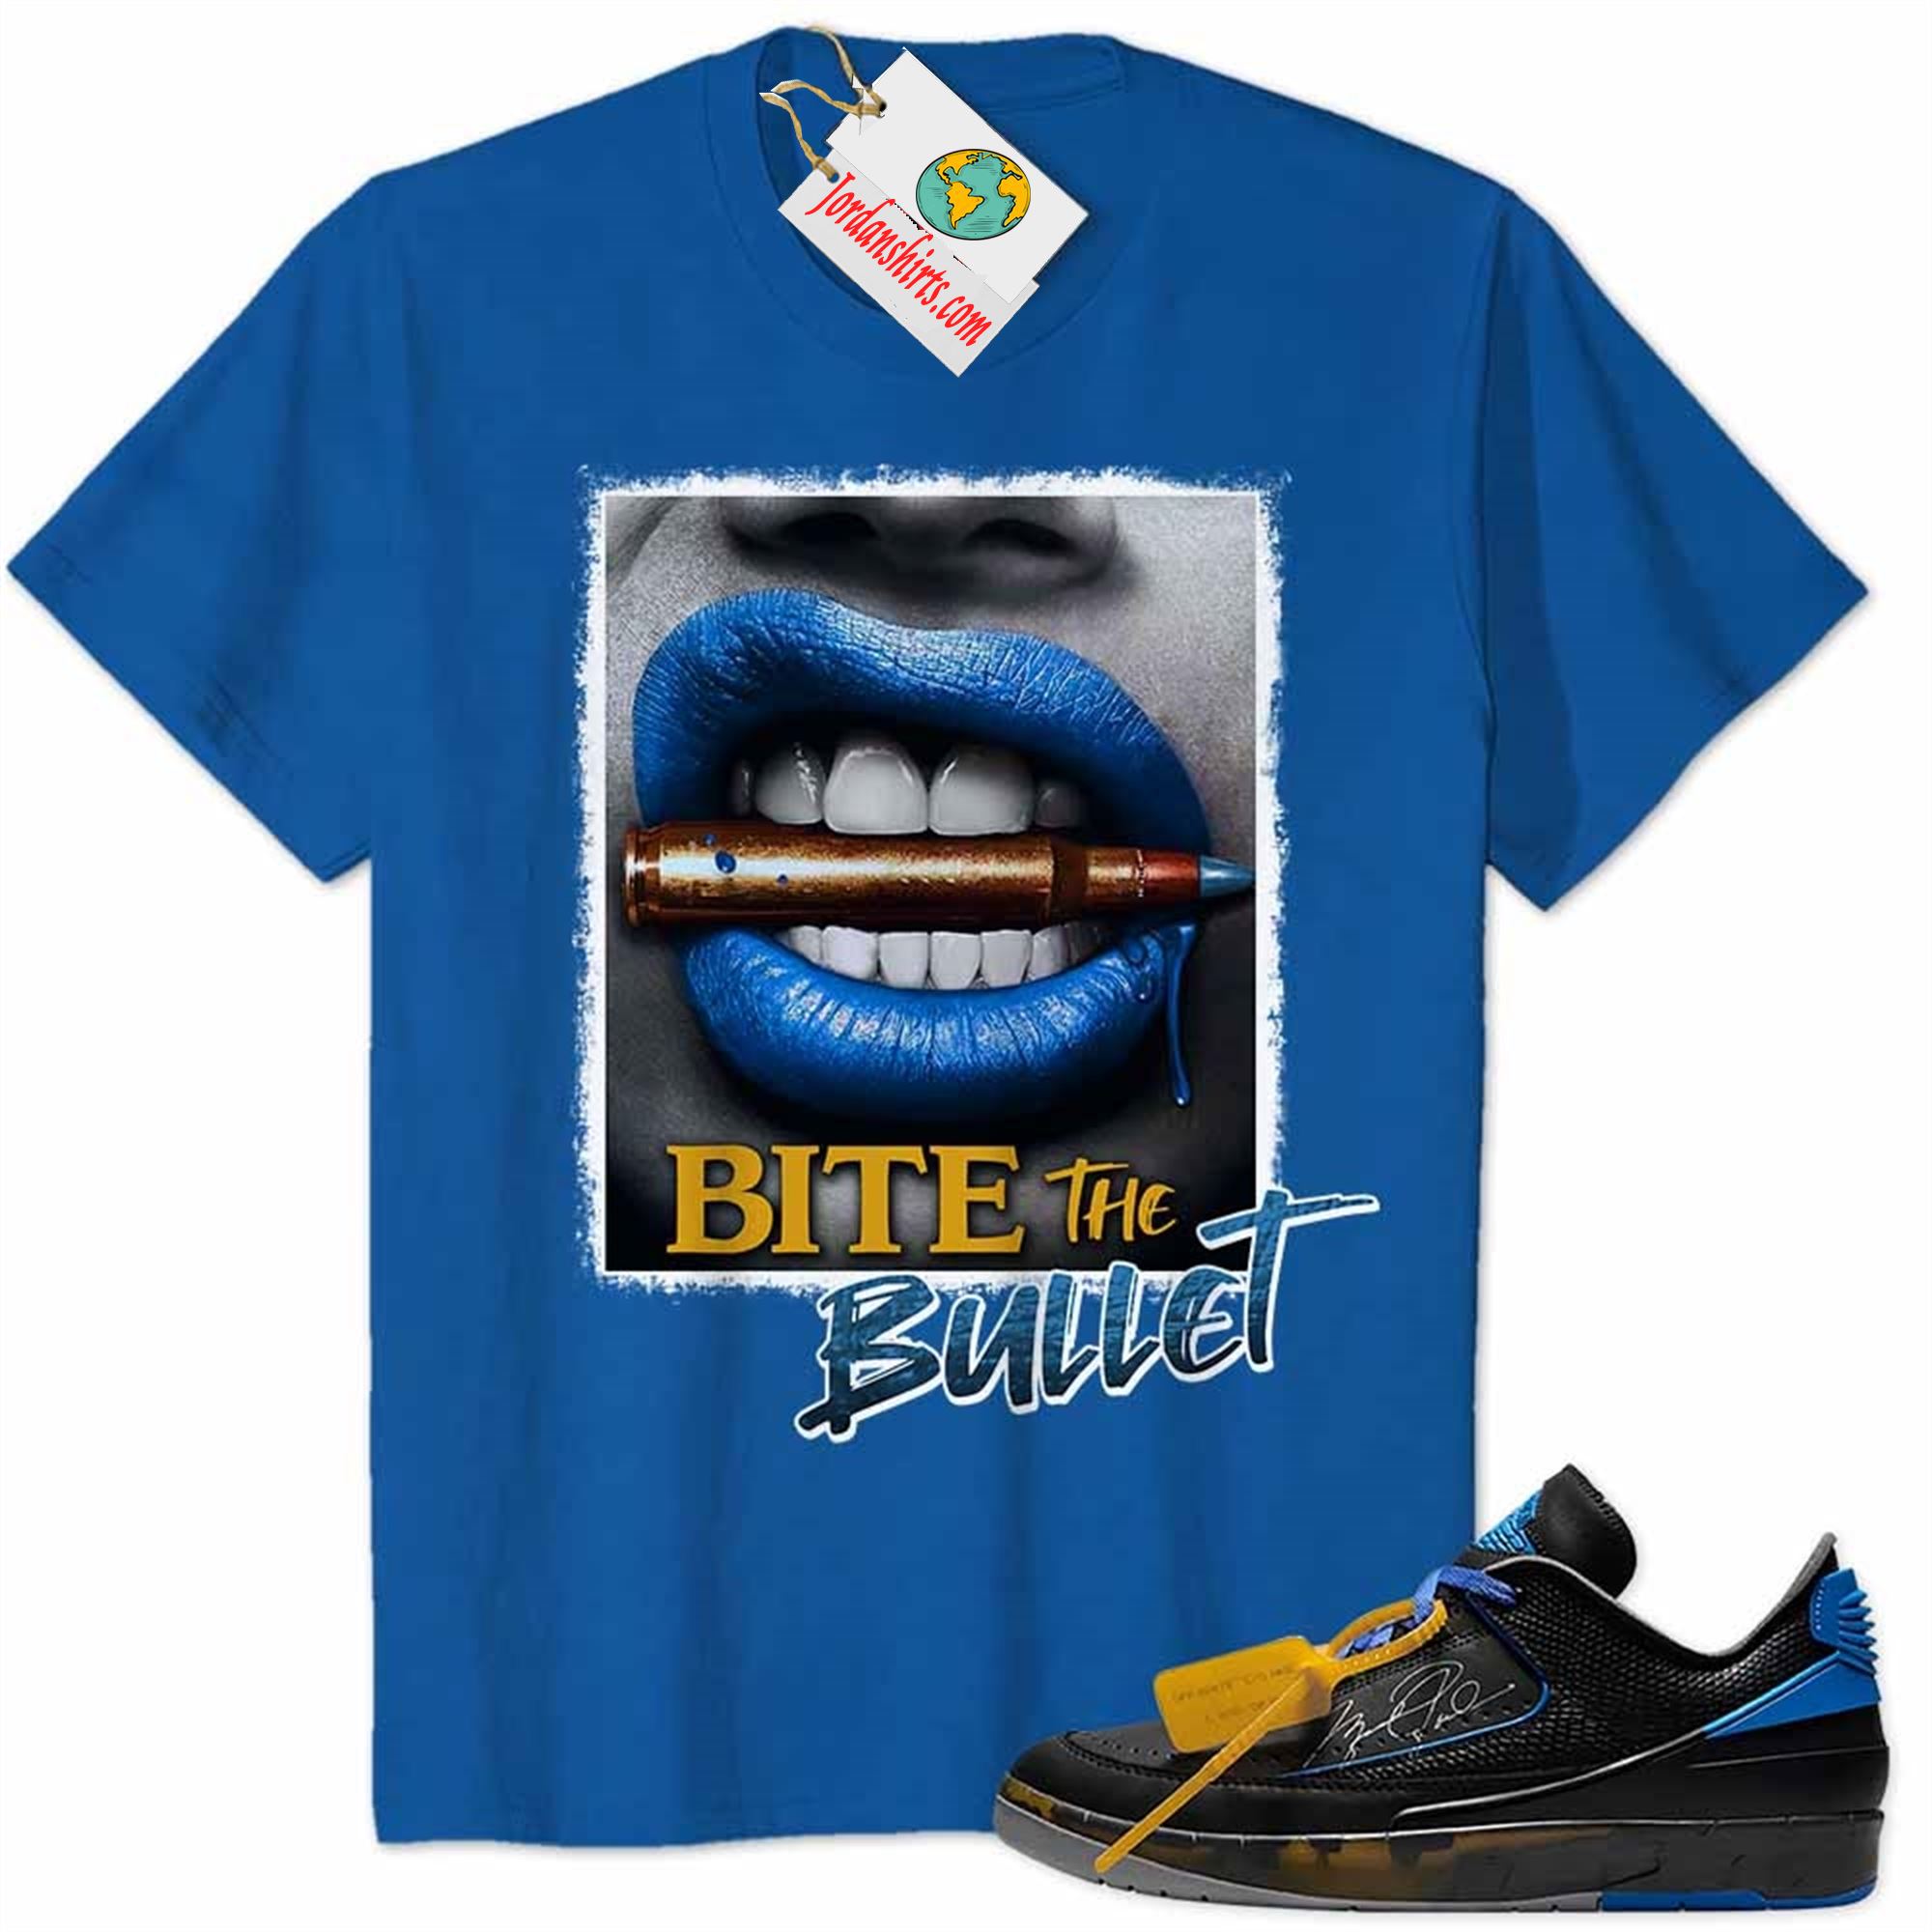 Jordan 2 Shirt, Bite The Bullet Sexy Girl Blue Air Jordan 2 Low X Off-white Black And Varsity Royal 2s Size Up To 5xl